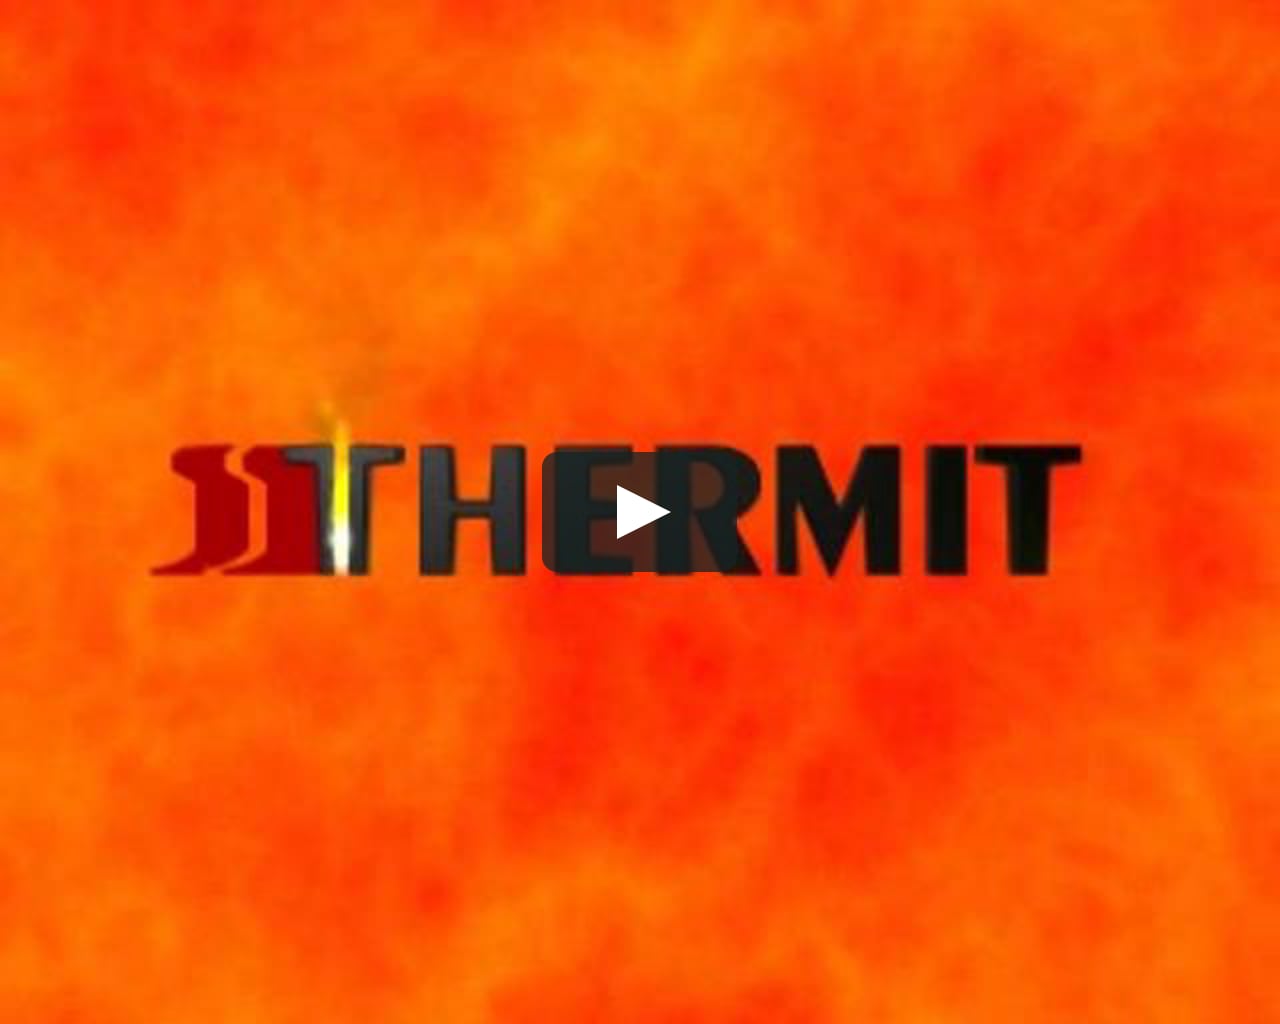 Thermitrex welding animation on Vimeo